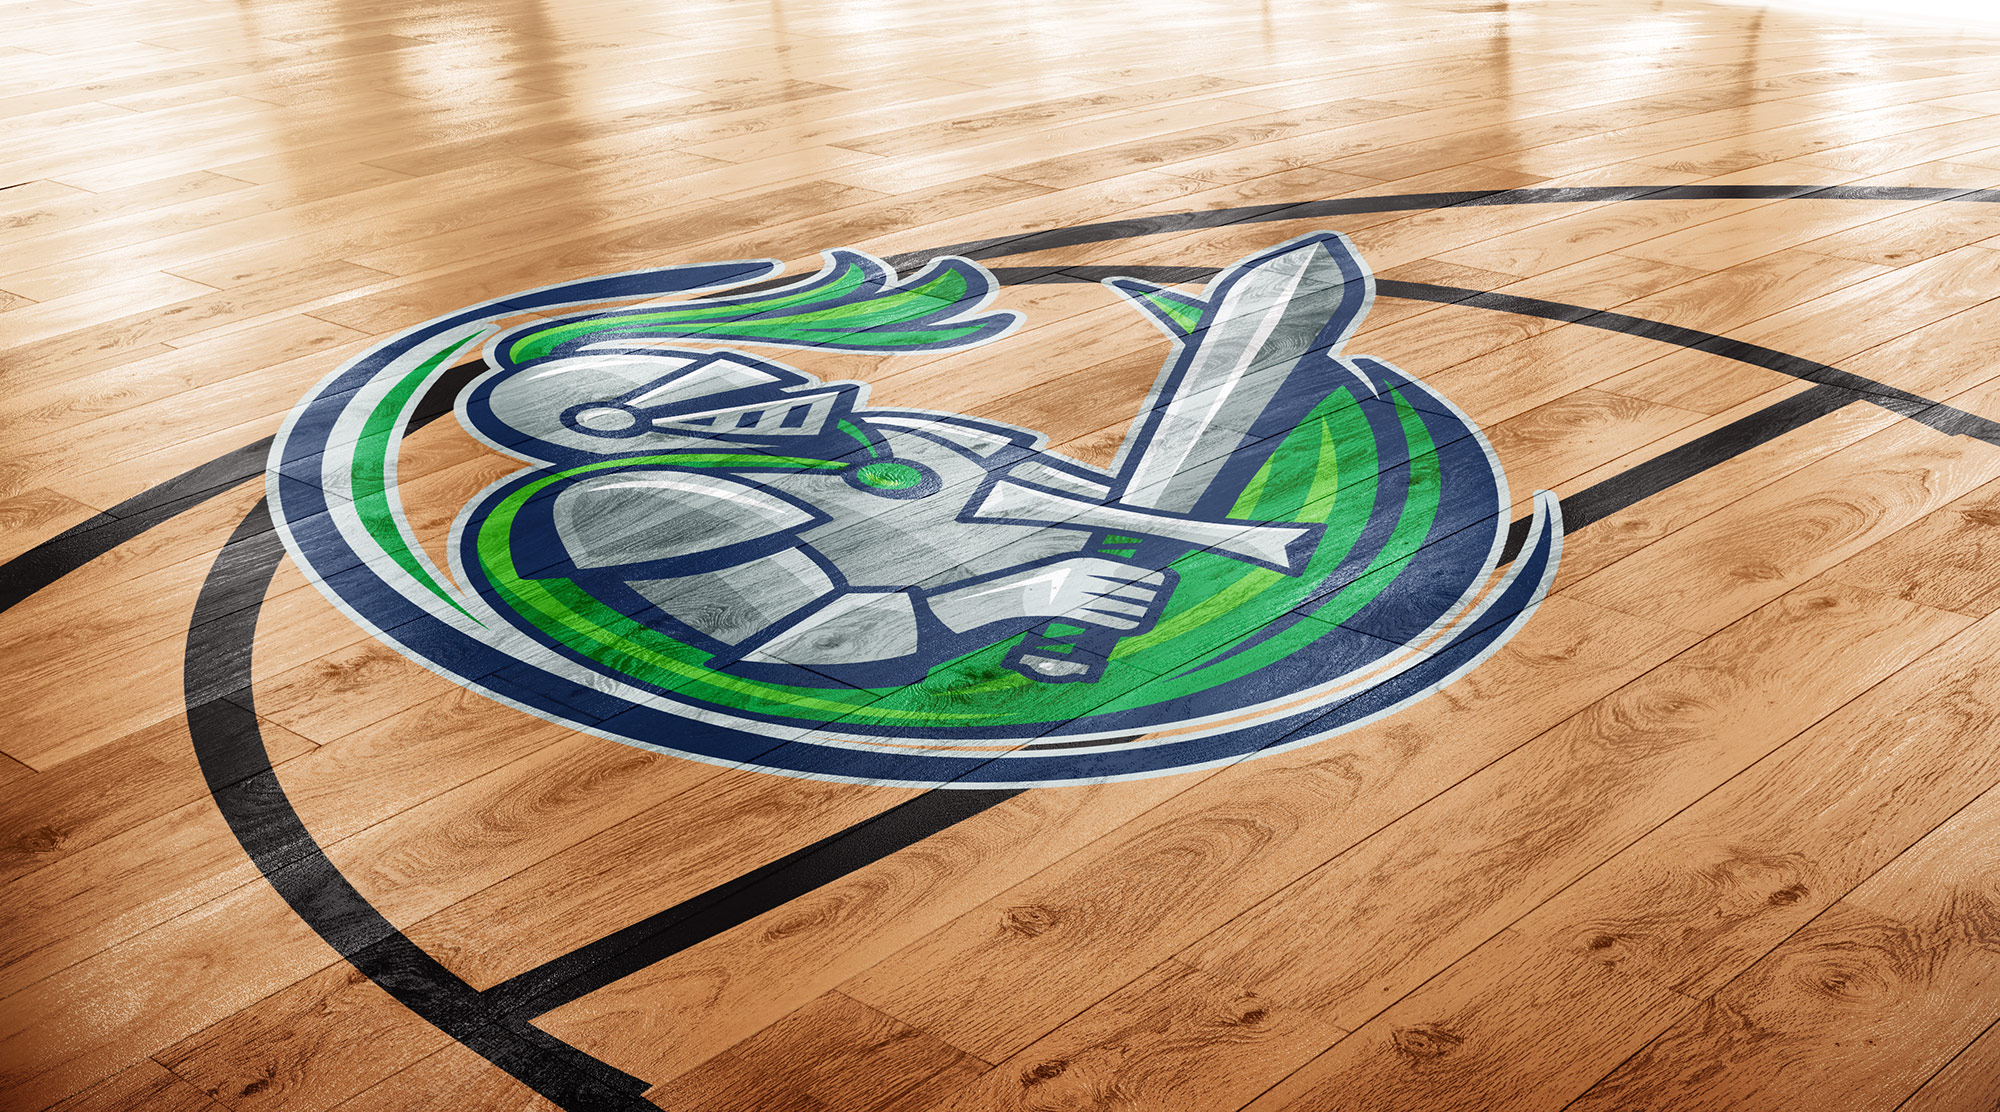 stc basketball court logo